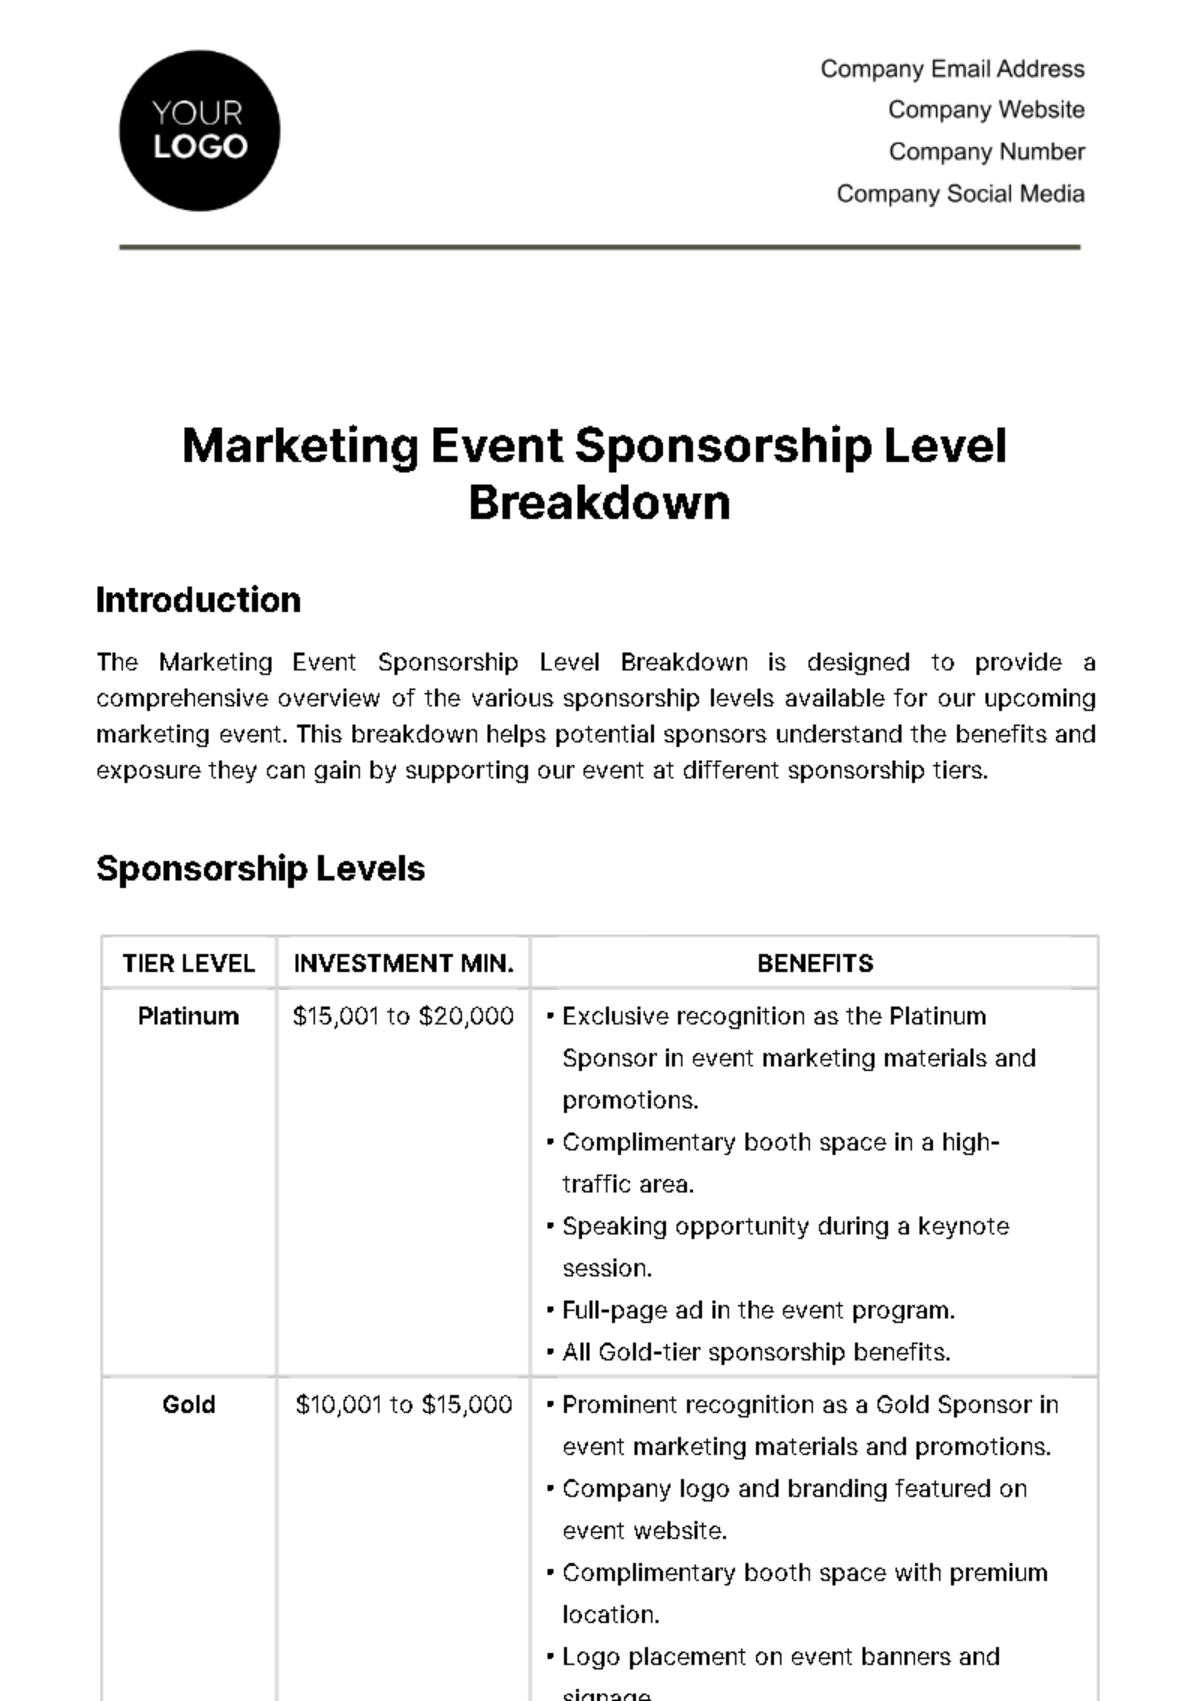 Free Marketing Event Sponsorship Level Breakdown Template